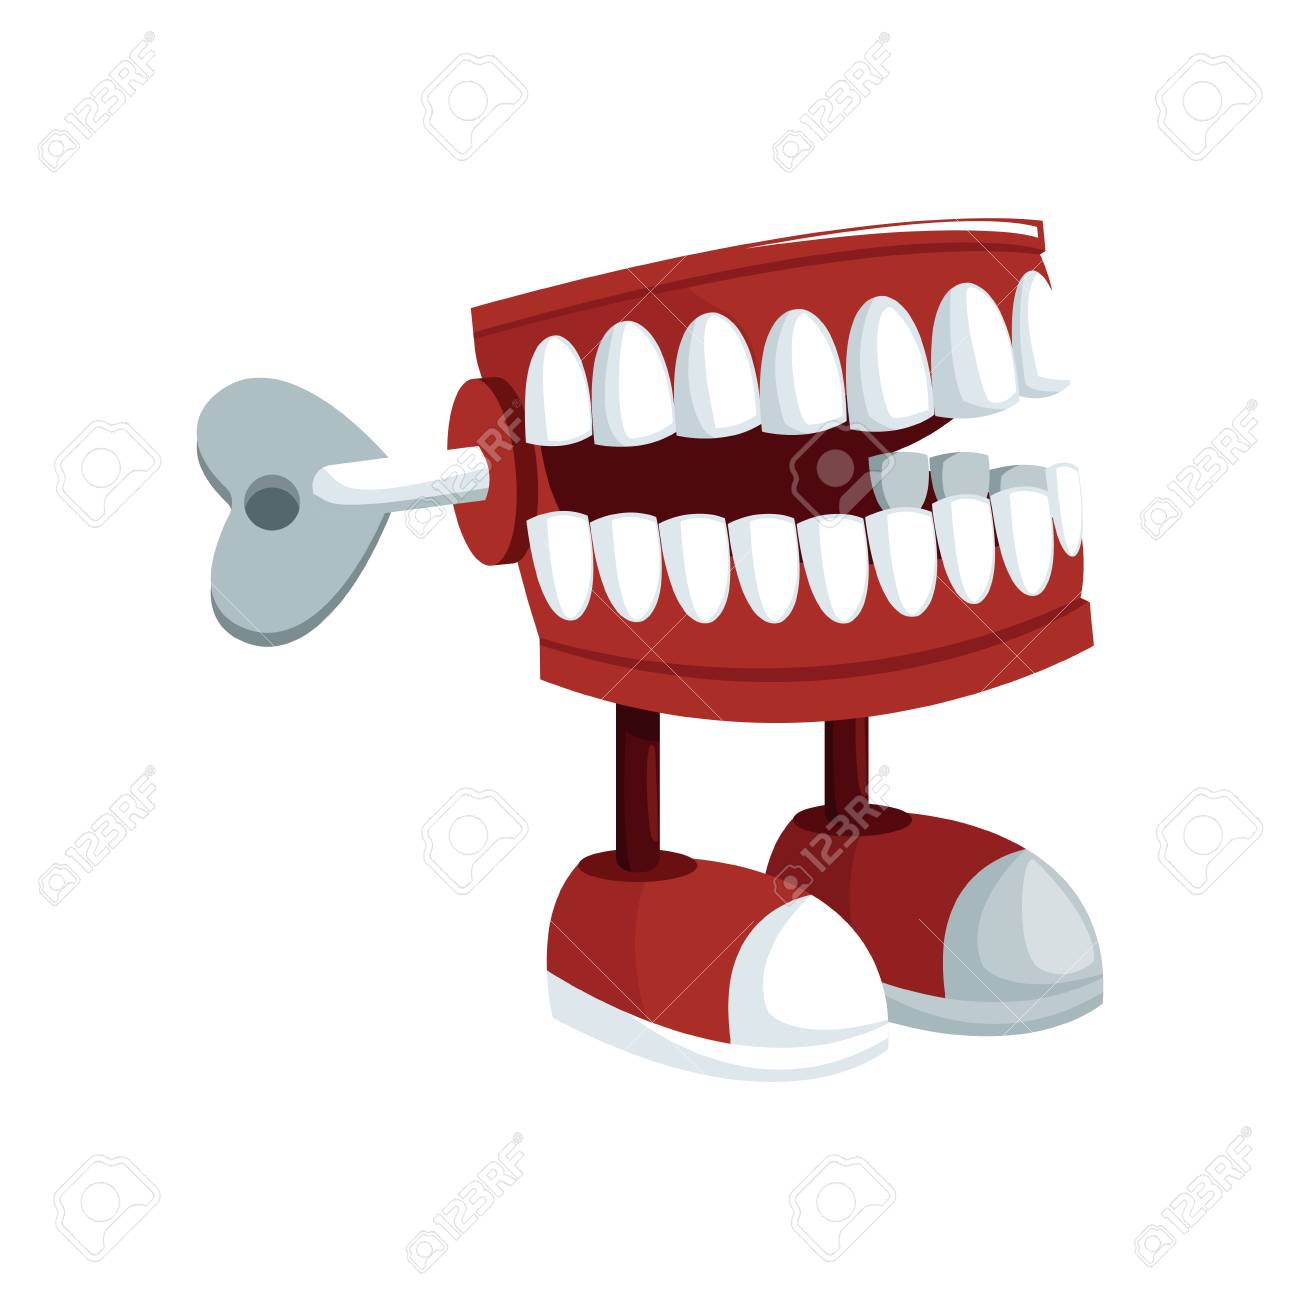 Teeth Practical Joke Icon Over White Background April Fools